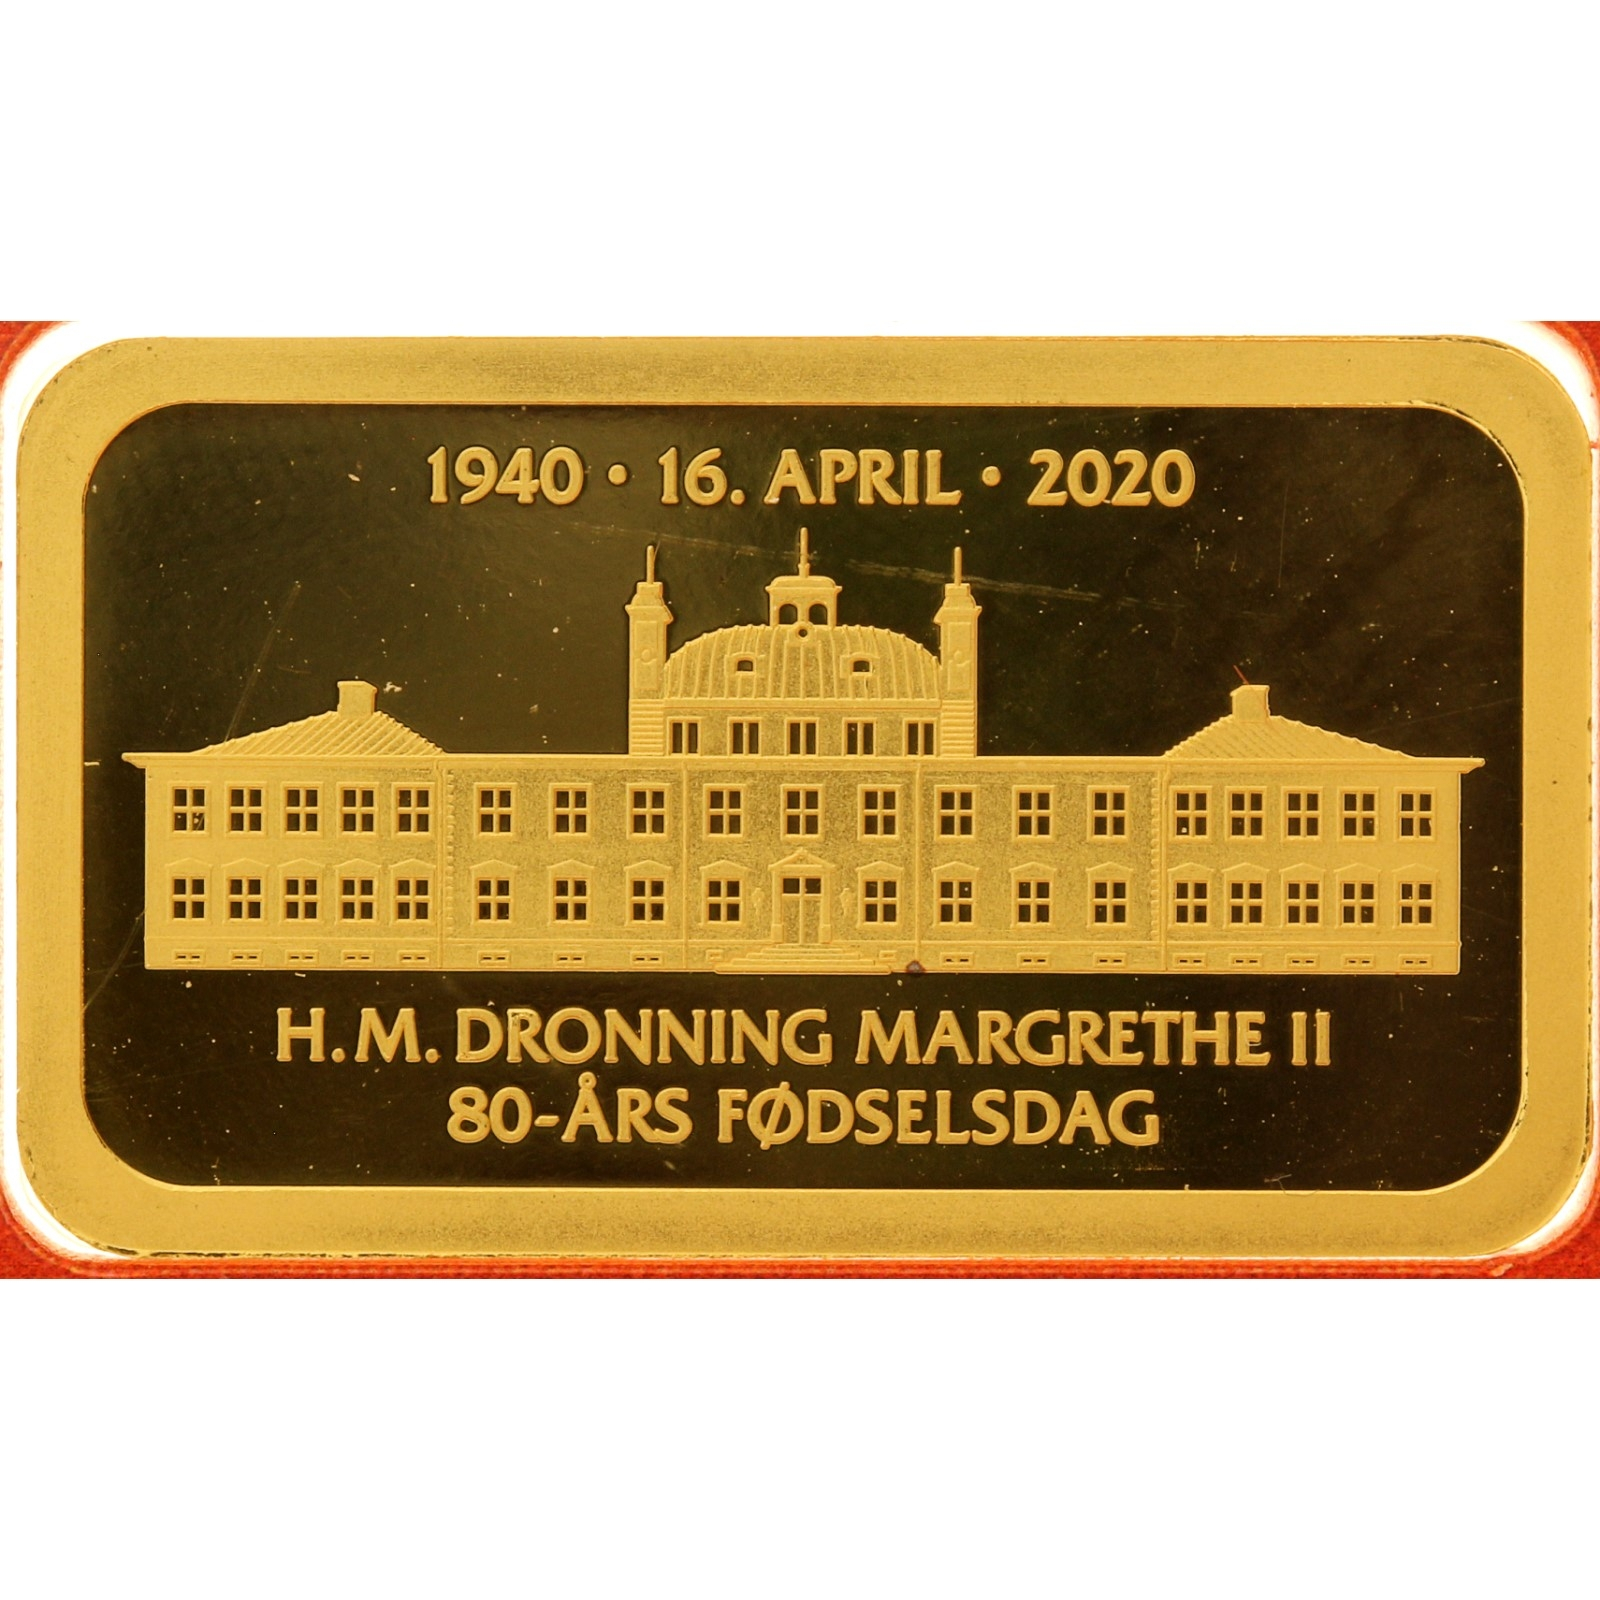 Schone Edelmetaal - H. M. Dronning Margrethe II - 5 gram - 1940-2020 - bar